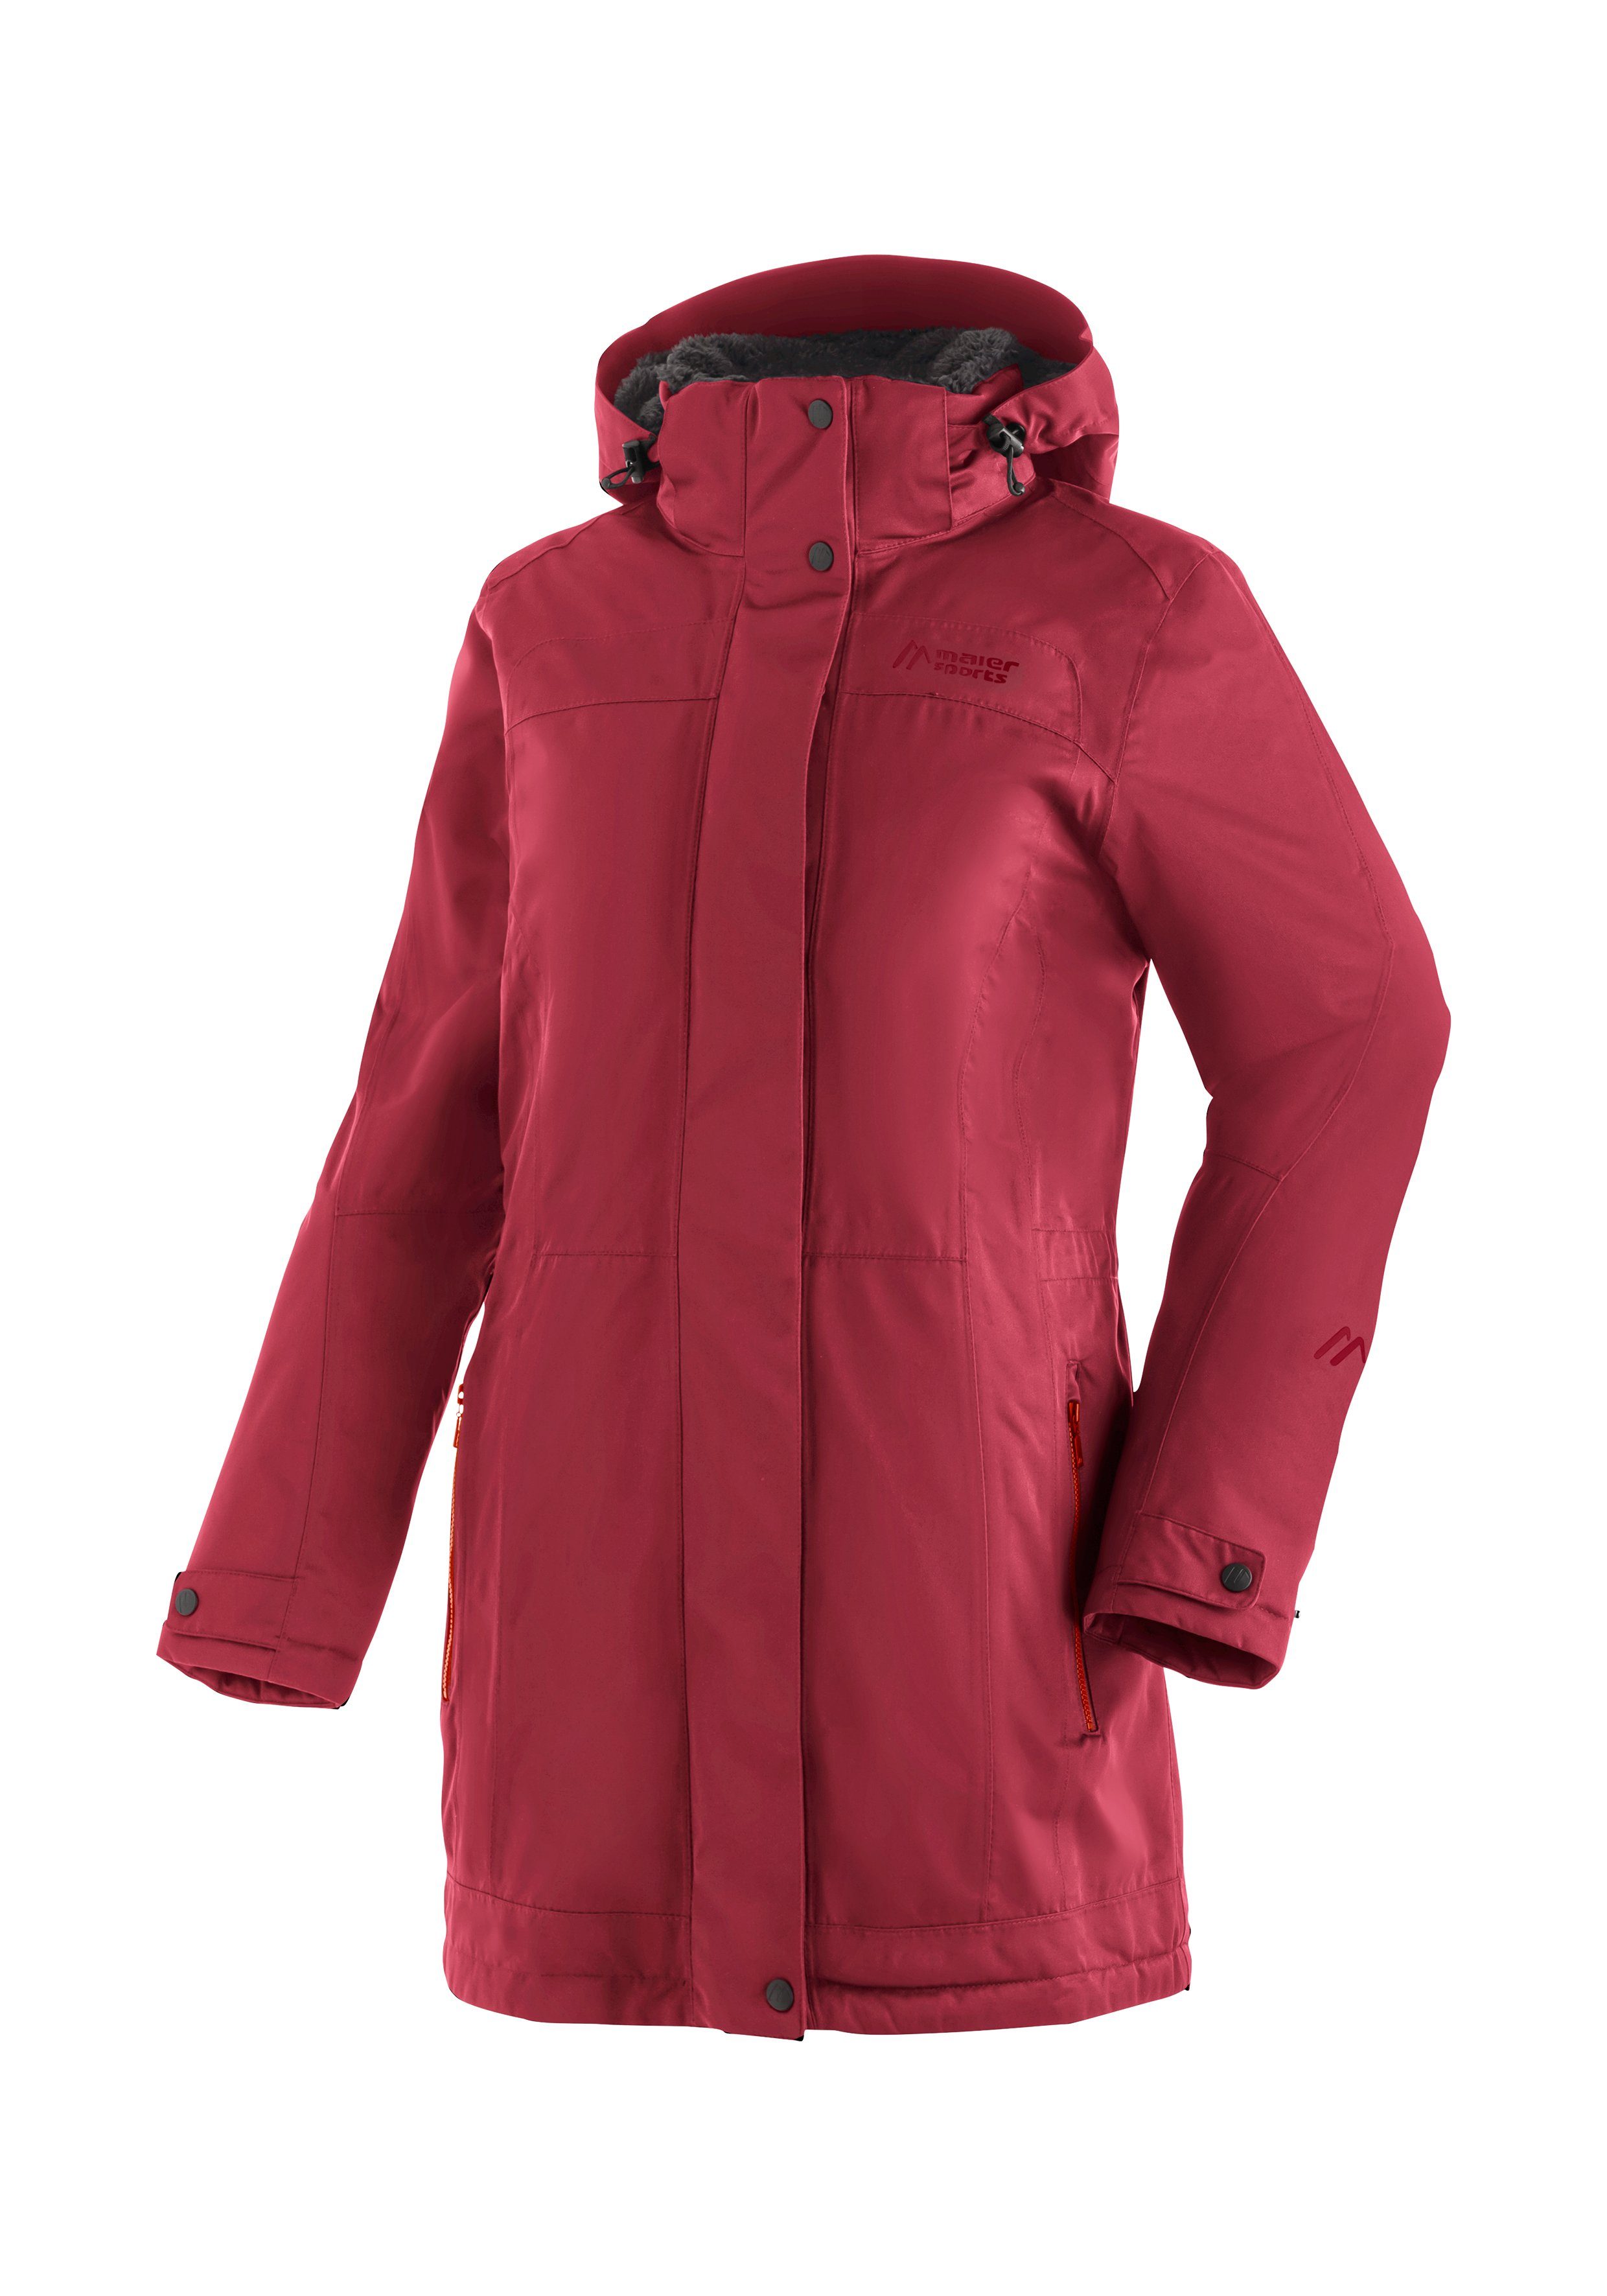 Maier Sports Funktionsjacke Lisa 2 Outdoor-Mantel mit vollem Wetterschutz bordeaux | Jacken